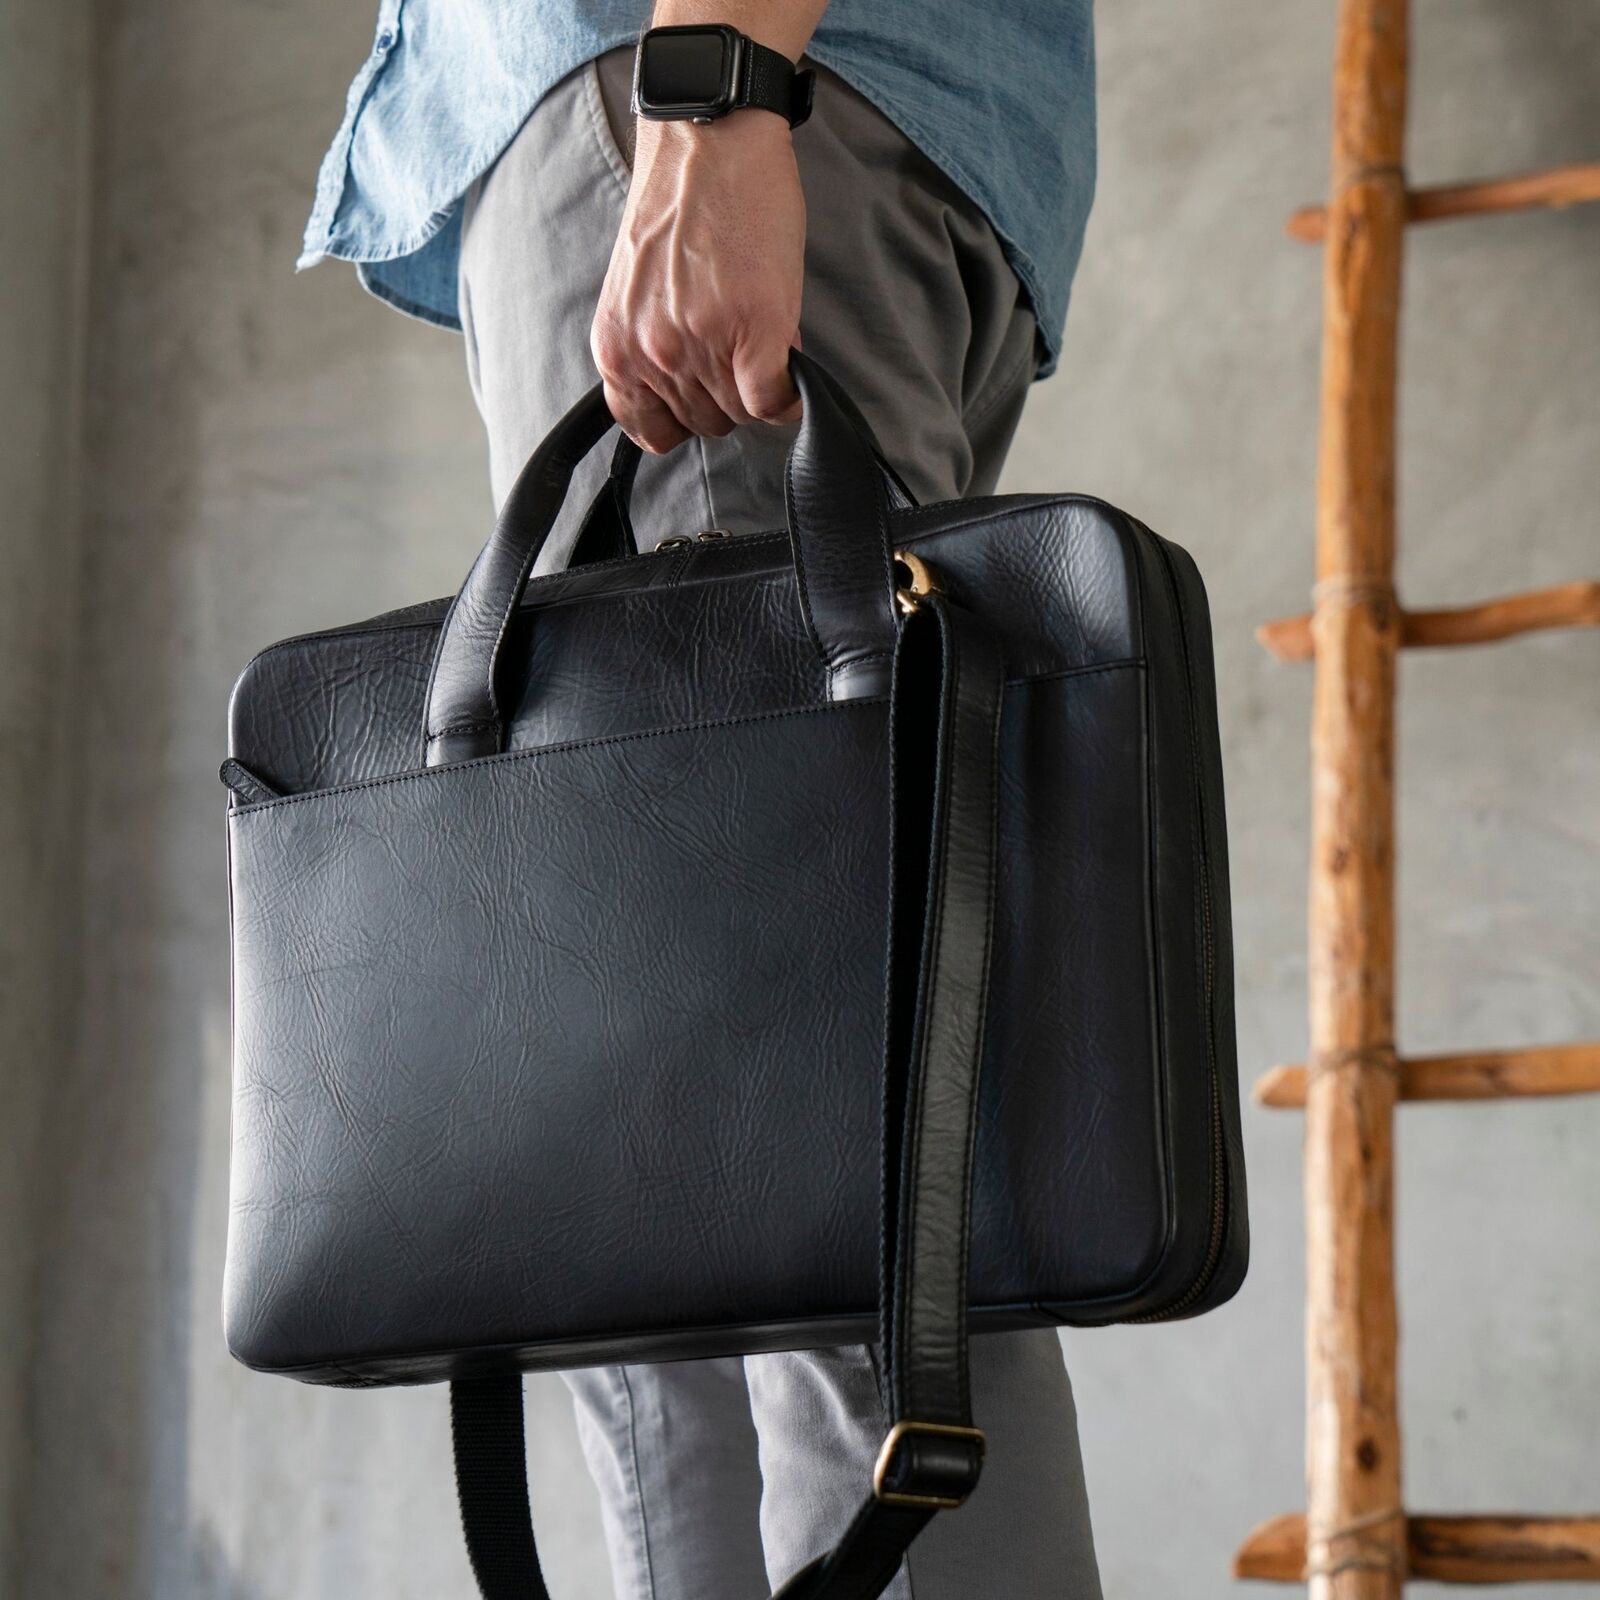 Personalized Leather Travel 16” Laptop Bag - Briefcase Satchel Portfolio